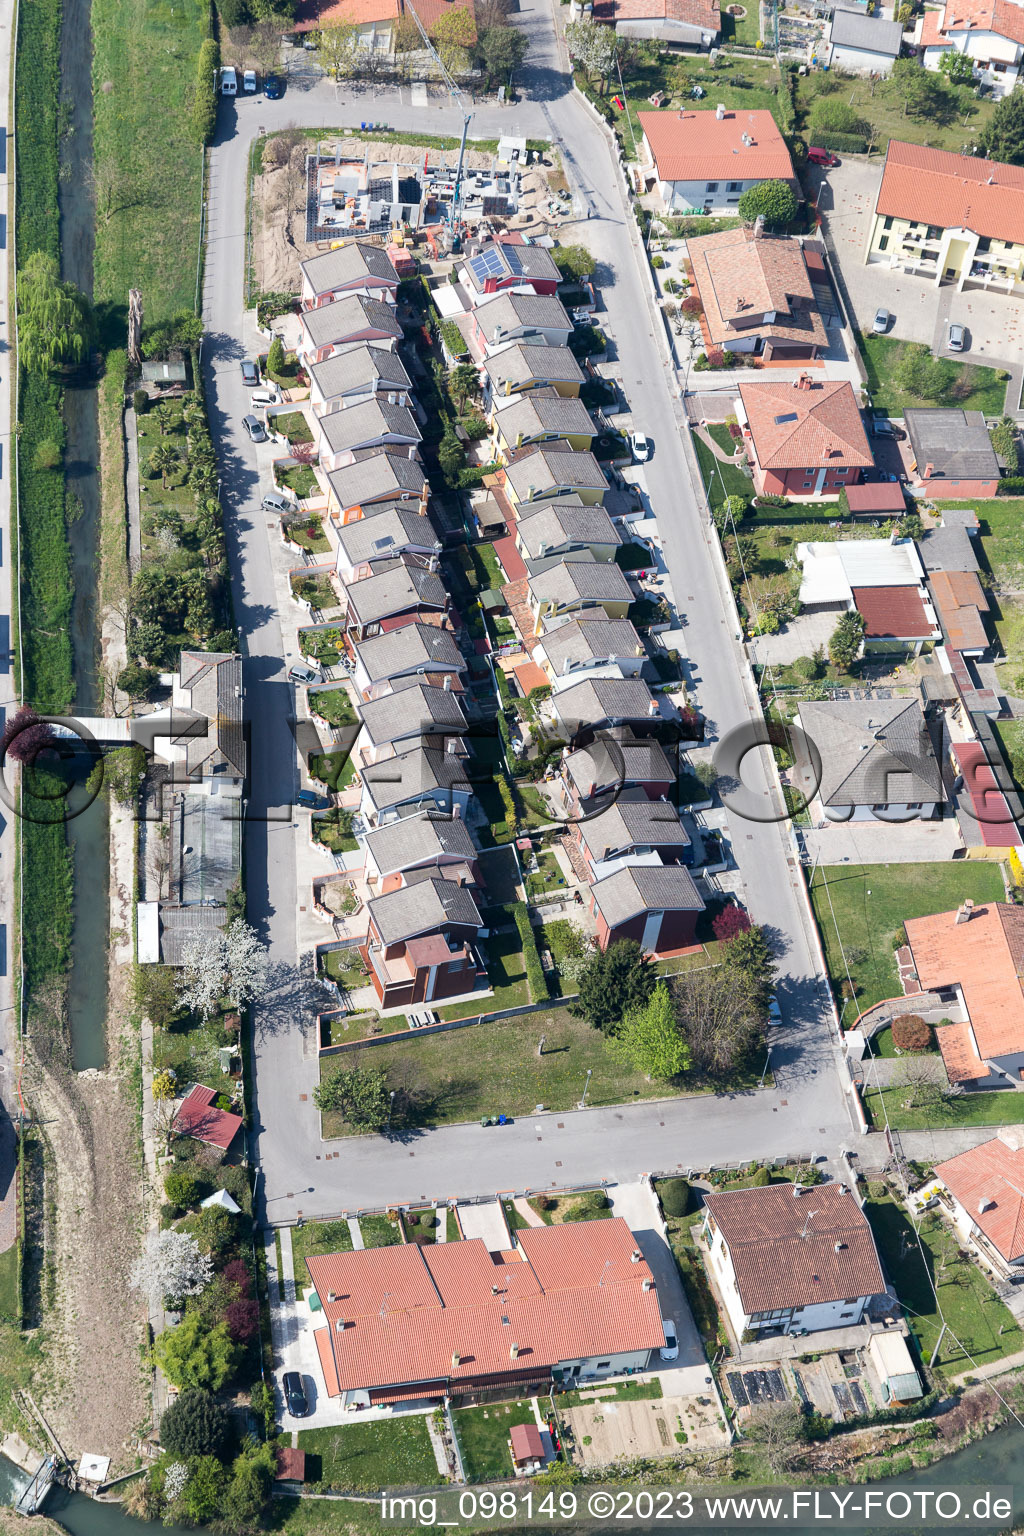 Luftaufnahme von Fossalta di Portogruaro im Bundesland Venetien, Italien